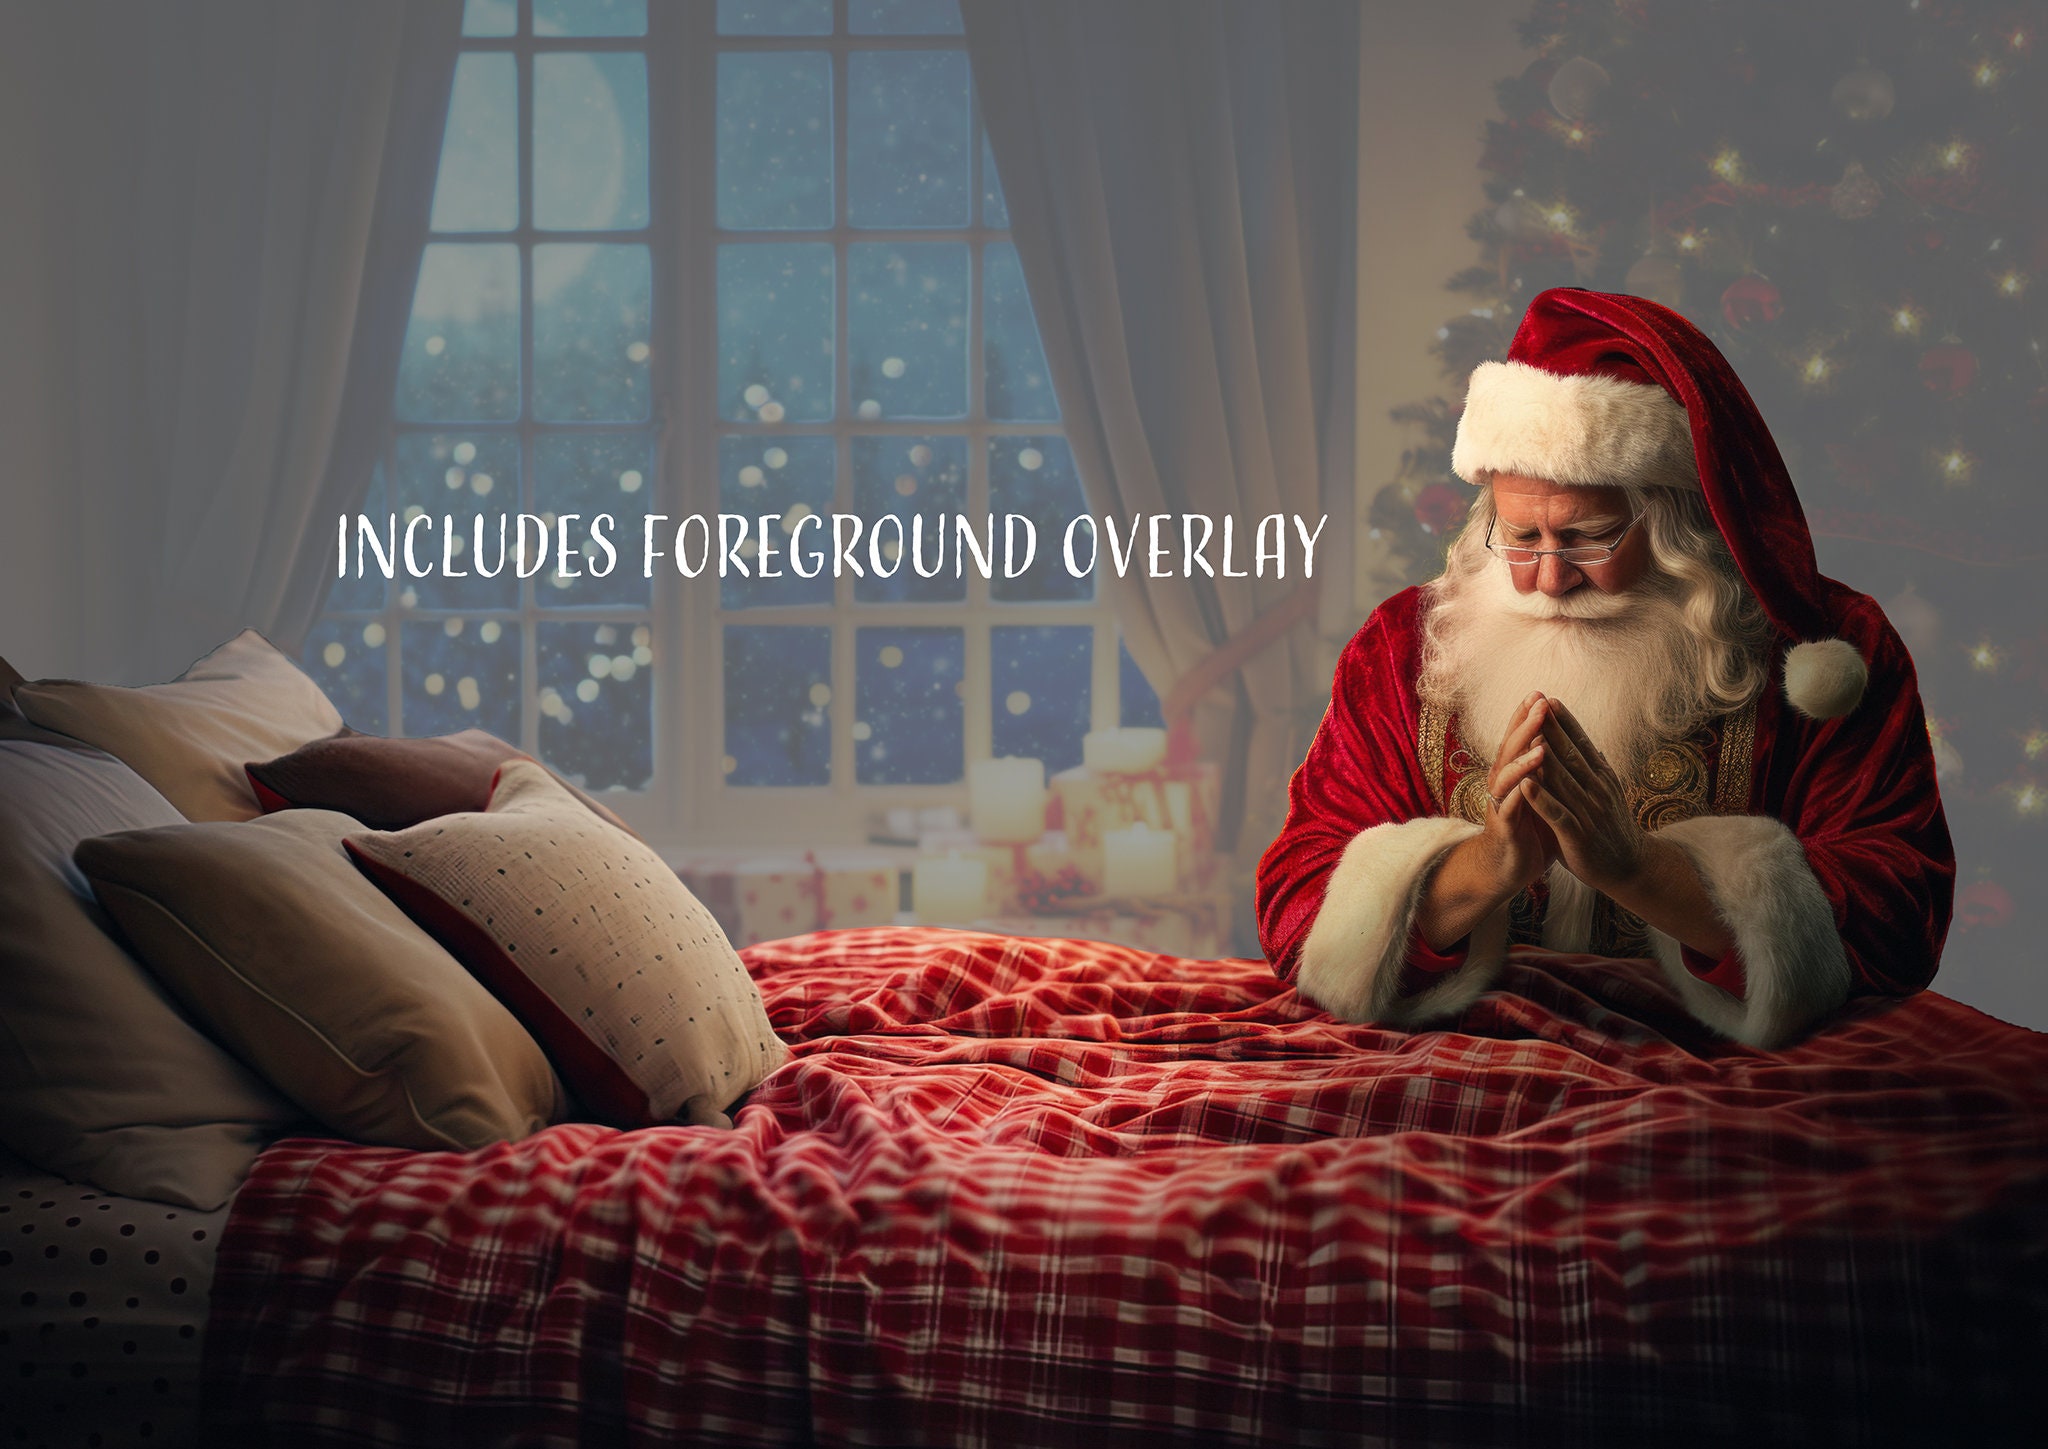 Create santa claus video ad, christmas photo album, christmas greeting,  card by Spokesperson23